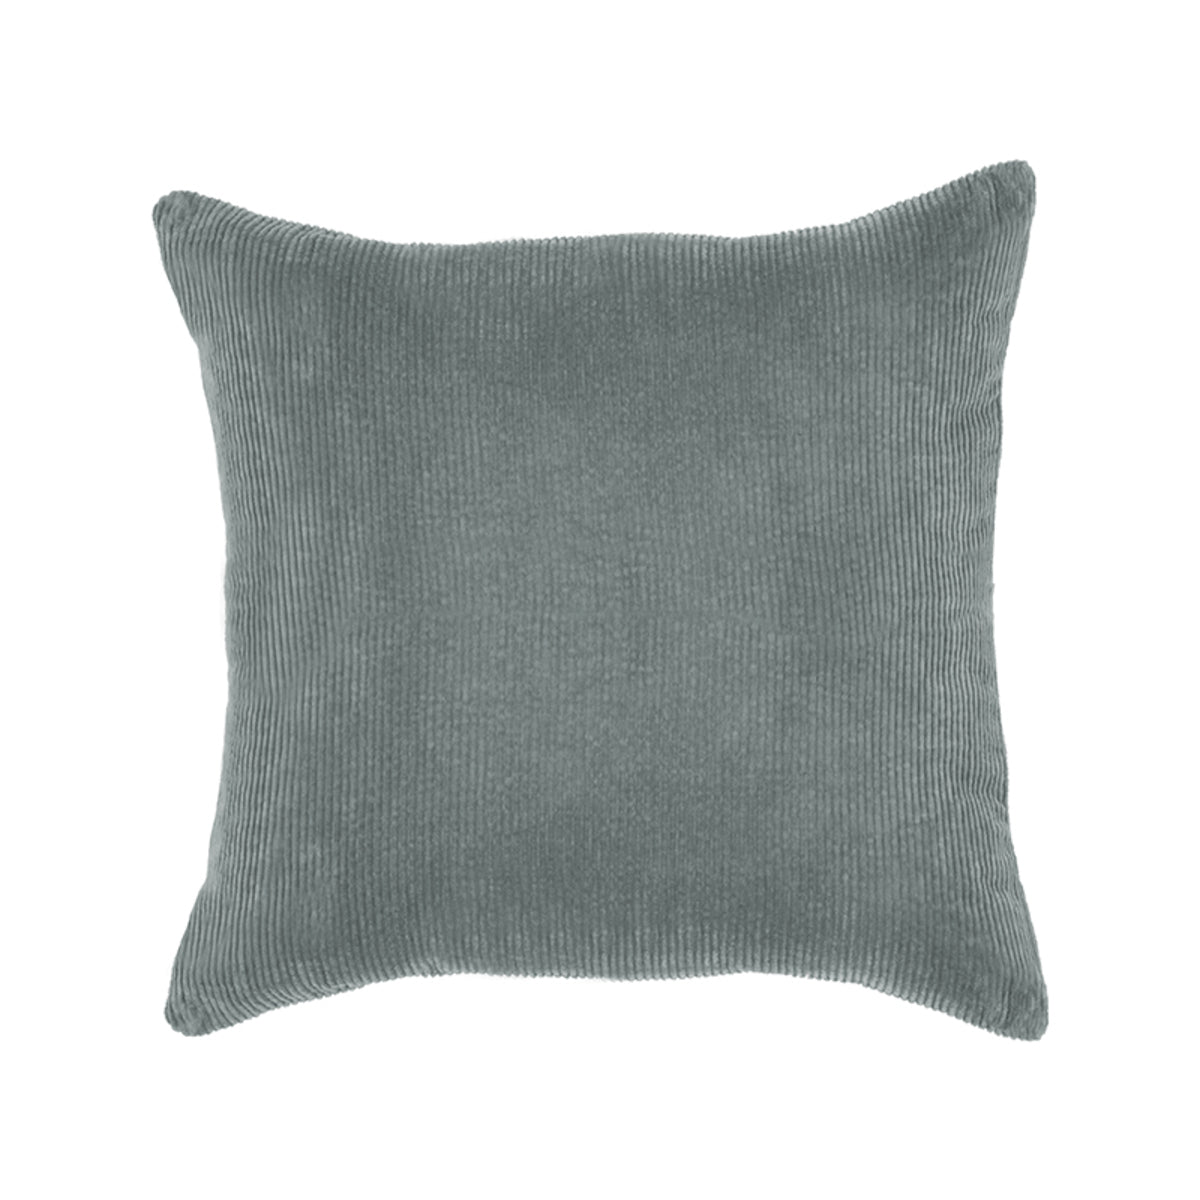 LABEL51 Decorative cushion Rib - Mint - Cotton